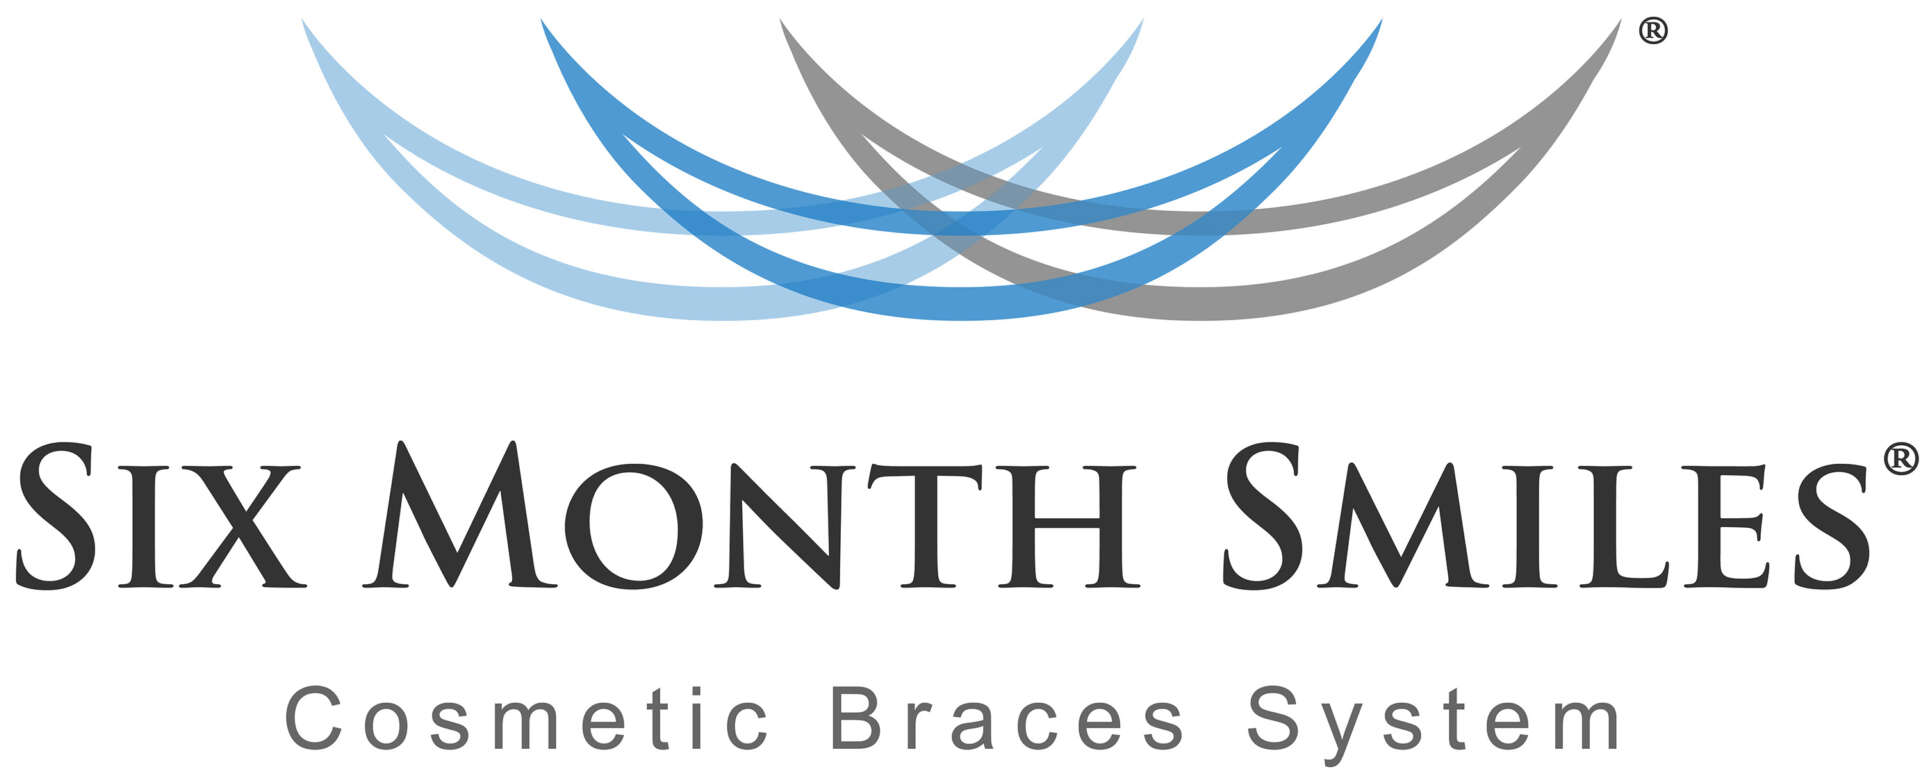 Six month smiles logo